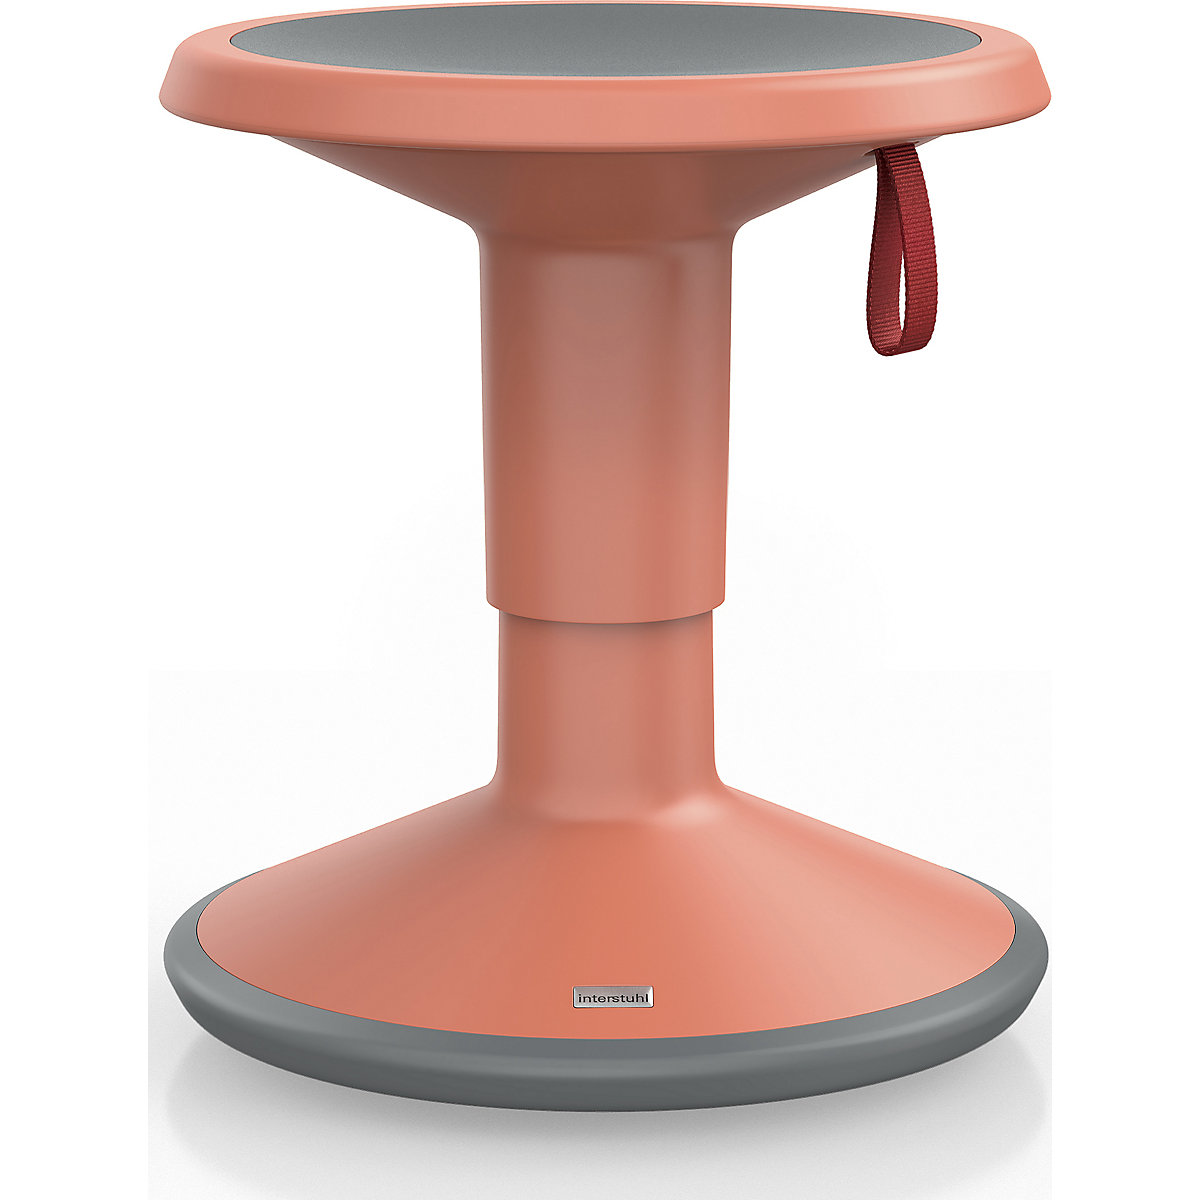 interstuhl – UP multifunctional stool, height adjustable 375 – 490 mm, salmon orange